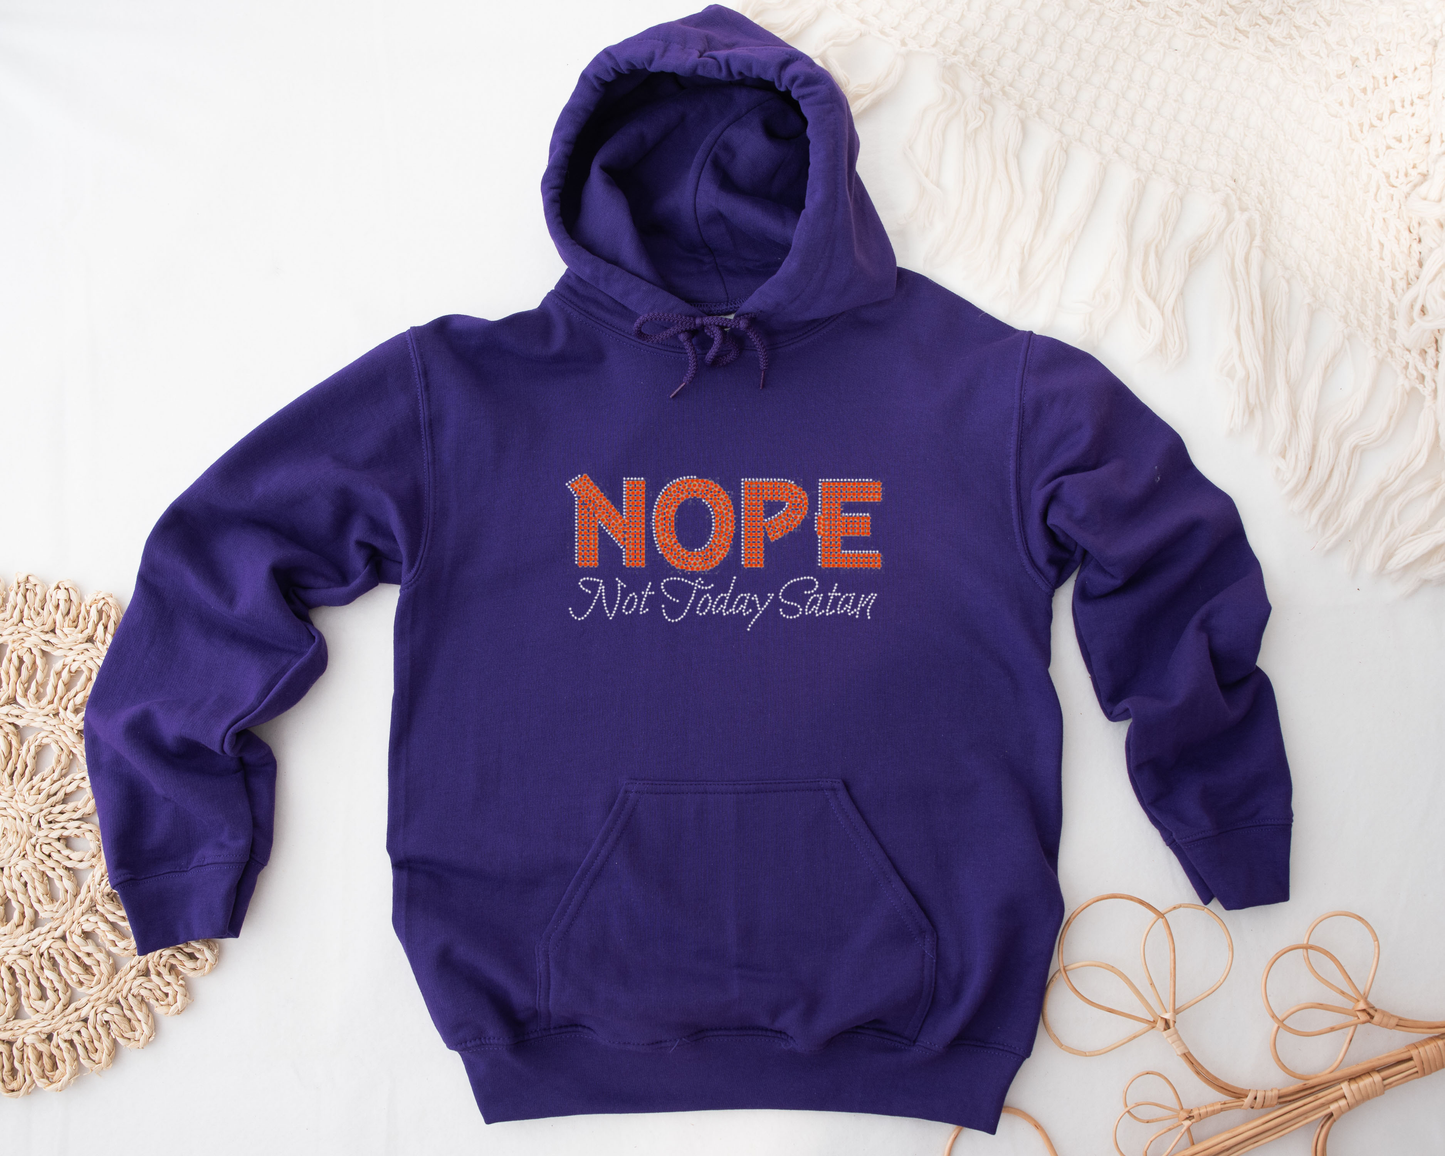 Nope Not today Satan Rhinestone hoodies/sweatshirts